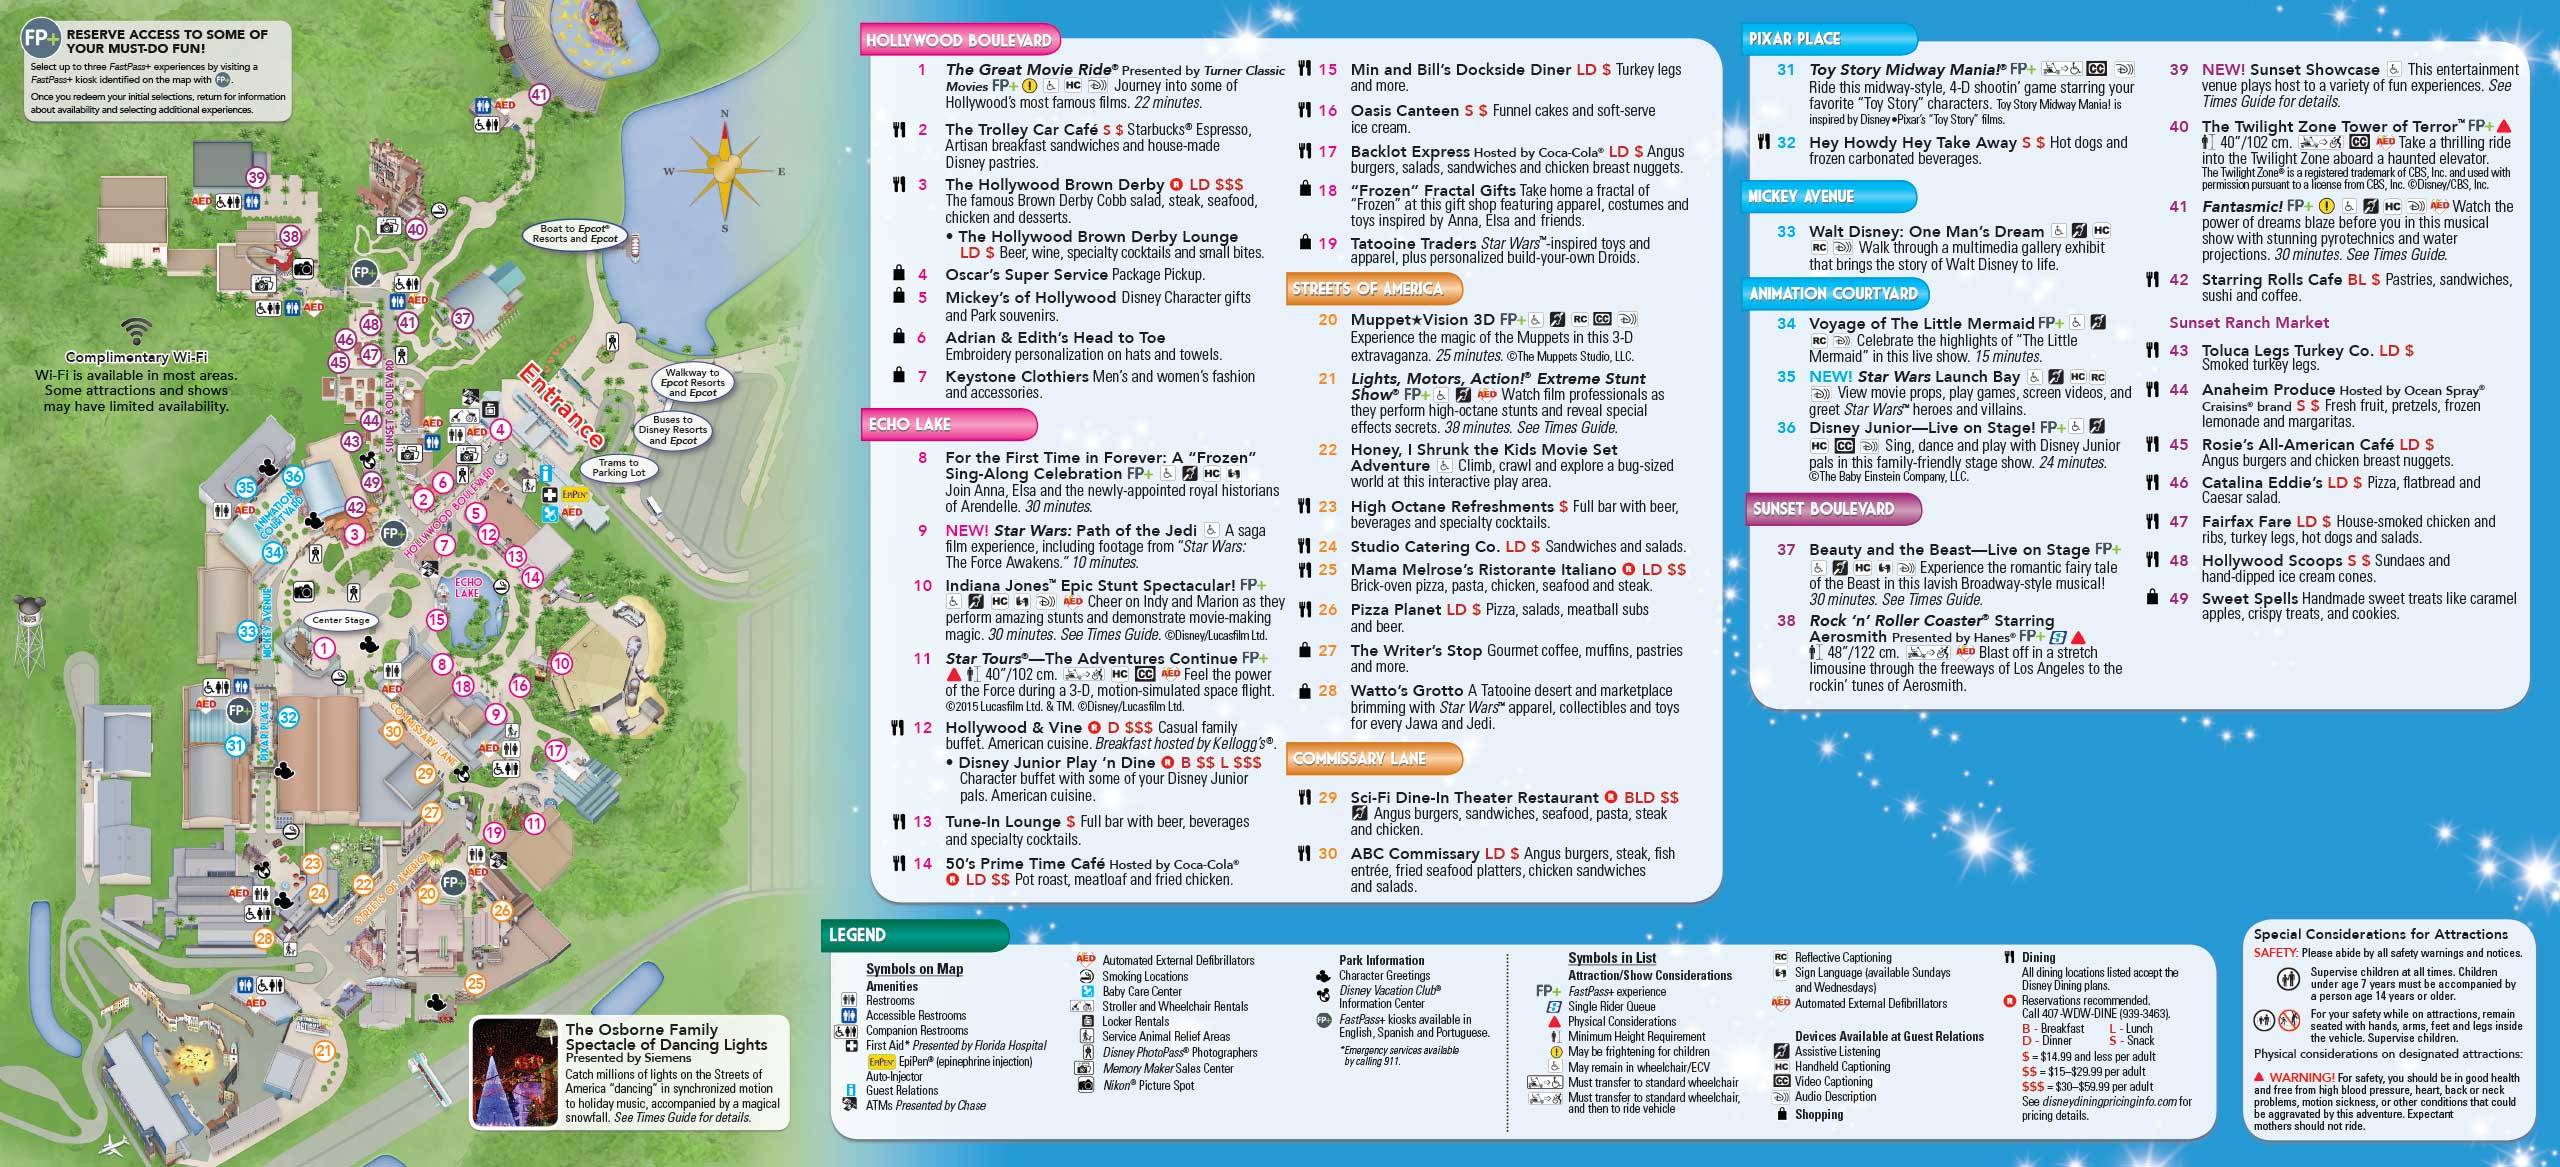 Disney's Hollywood Studios Guide Map December 2015 - Back